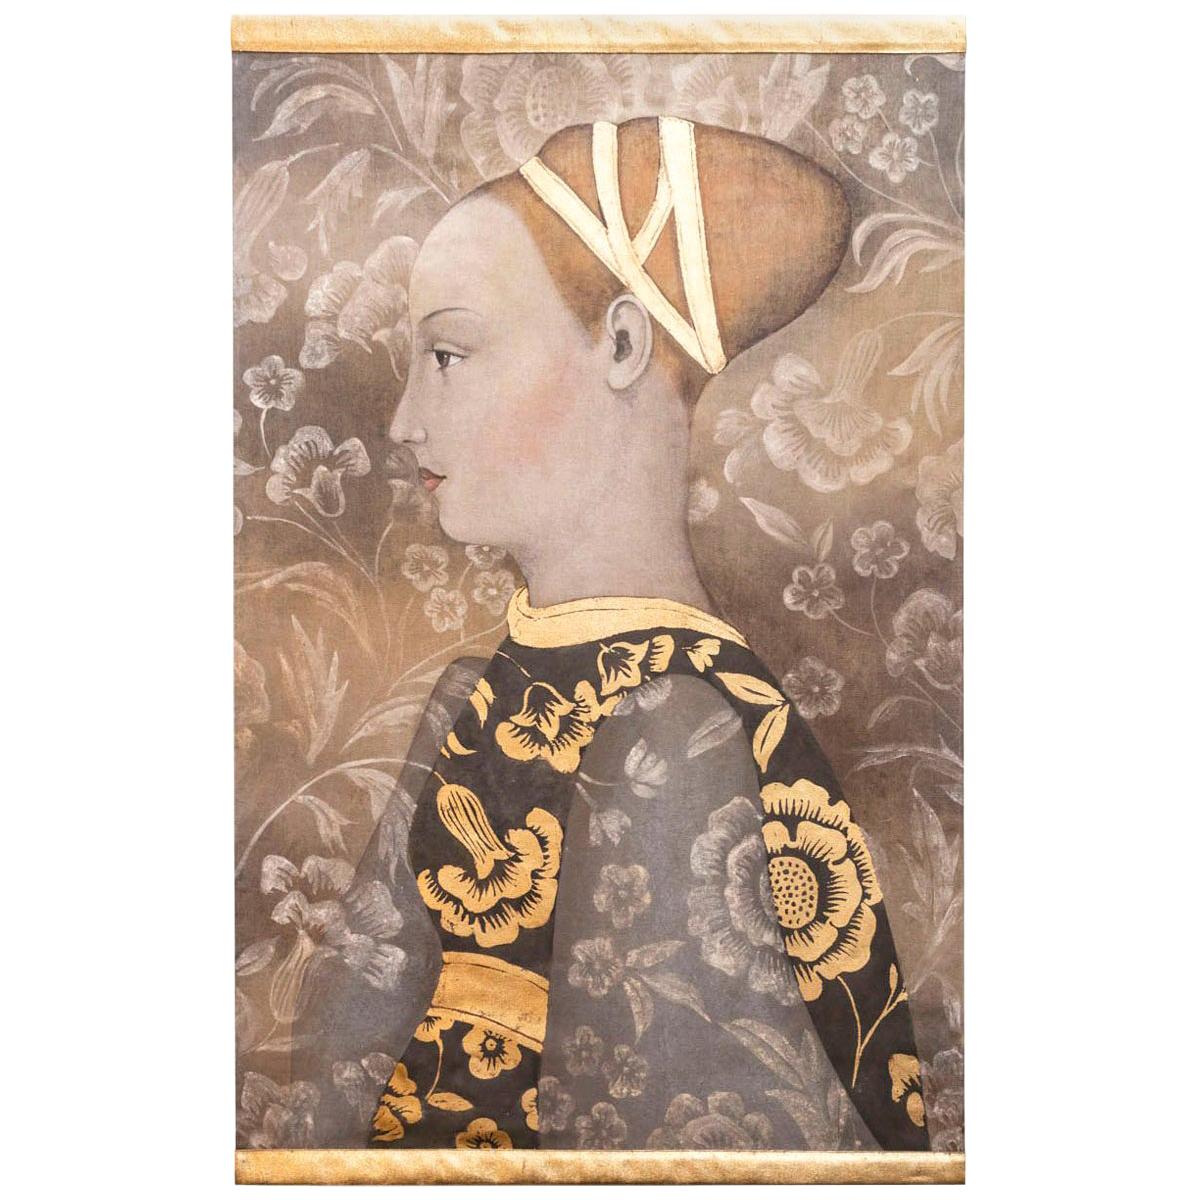 Painted Canvas of a Renaissance Style Woman Portrait, Contemporary Work